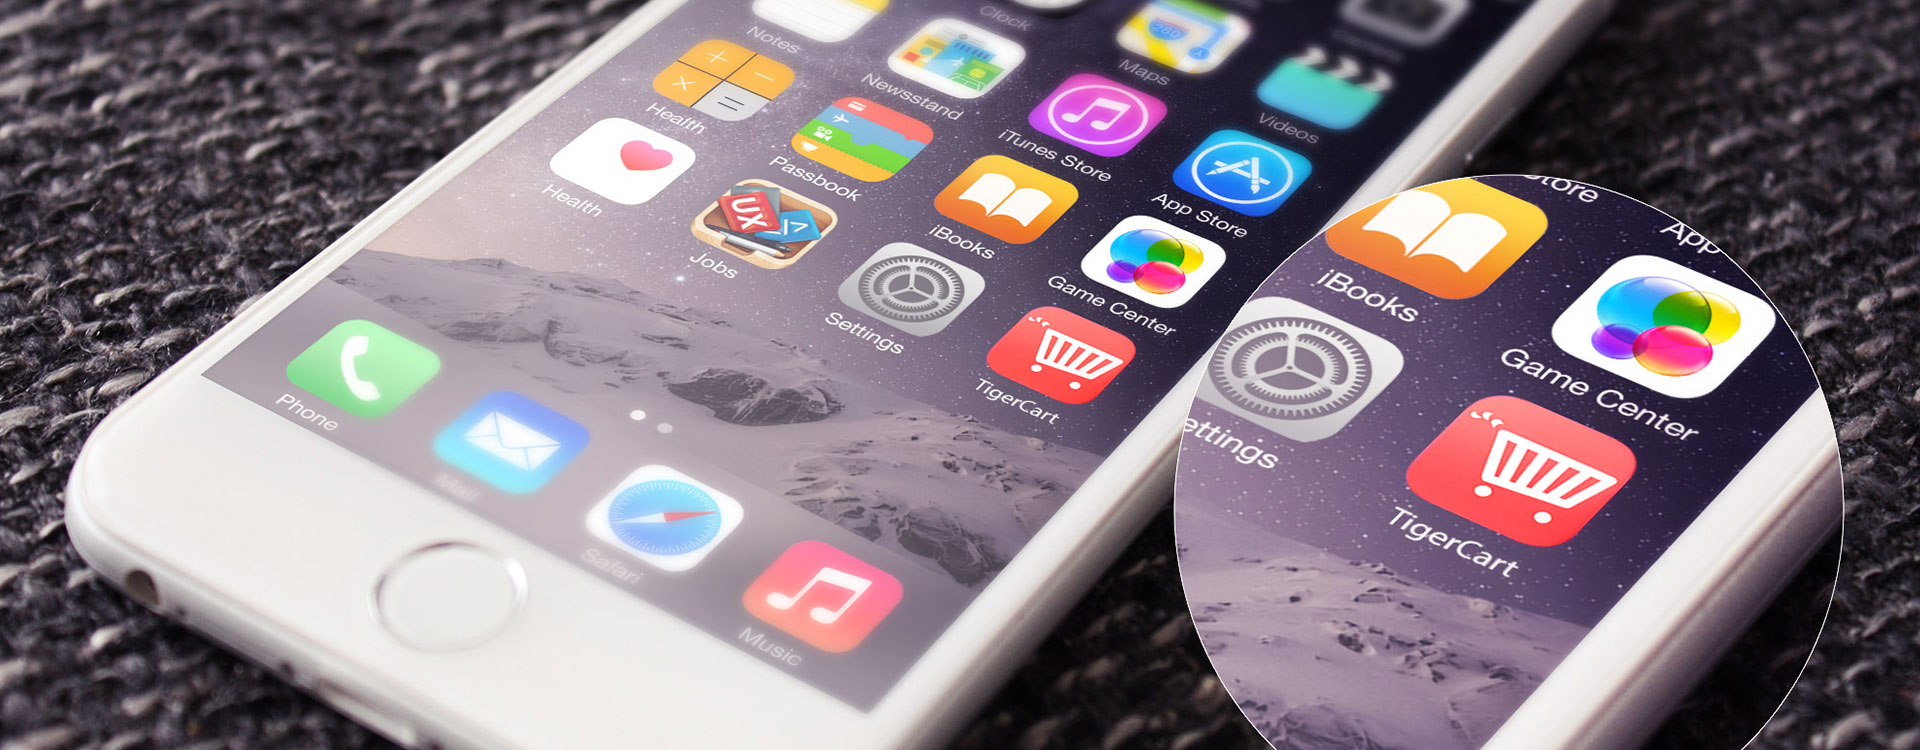 app icon mockup design for TigerCart - ecommerce platform